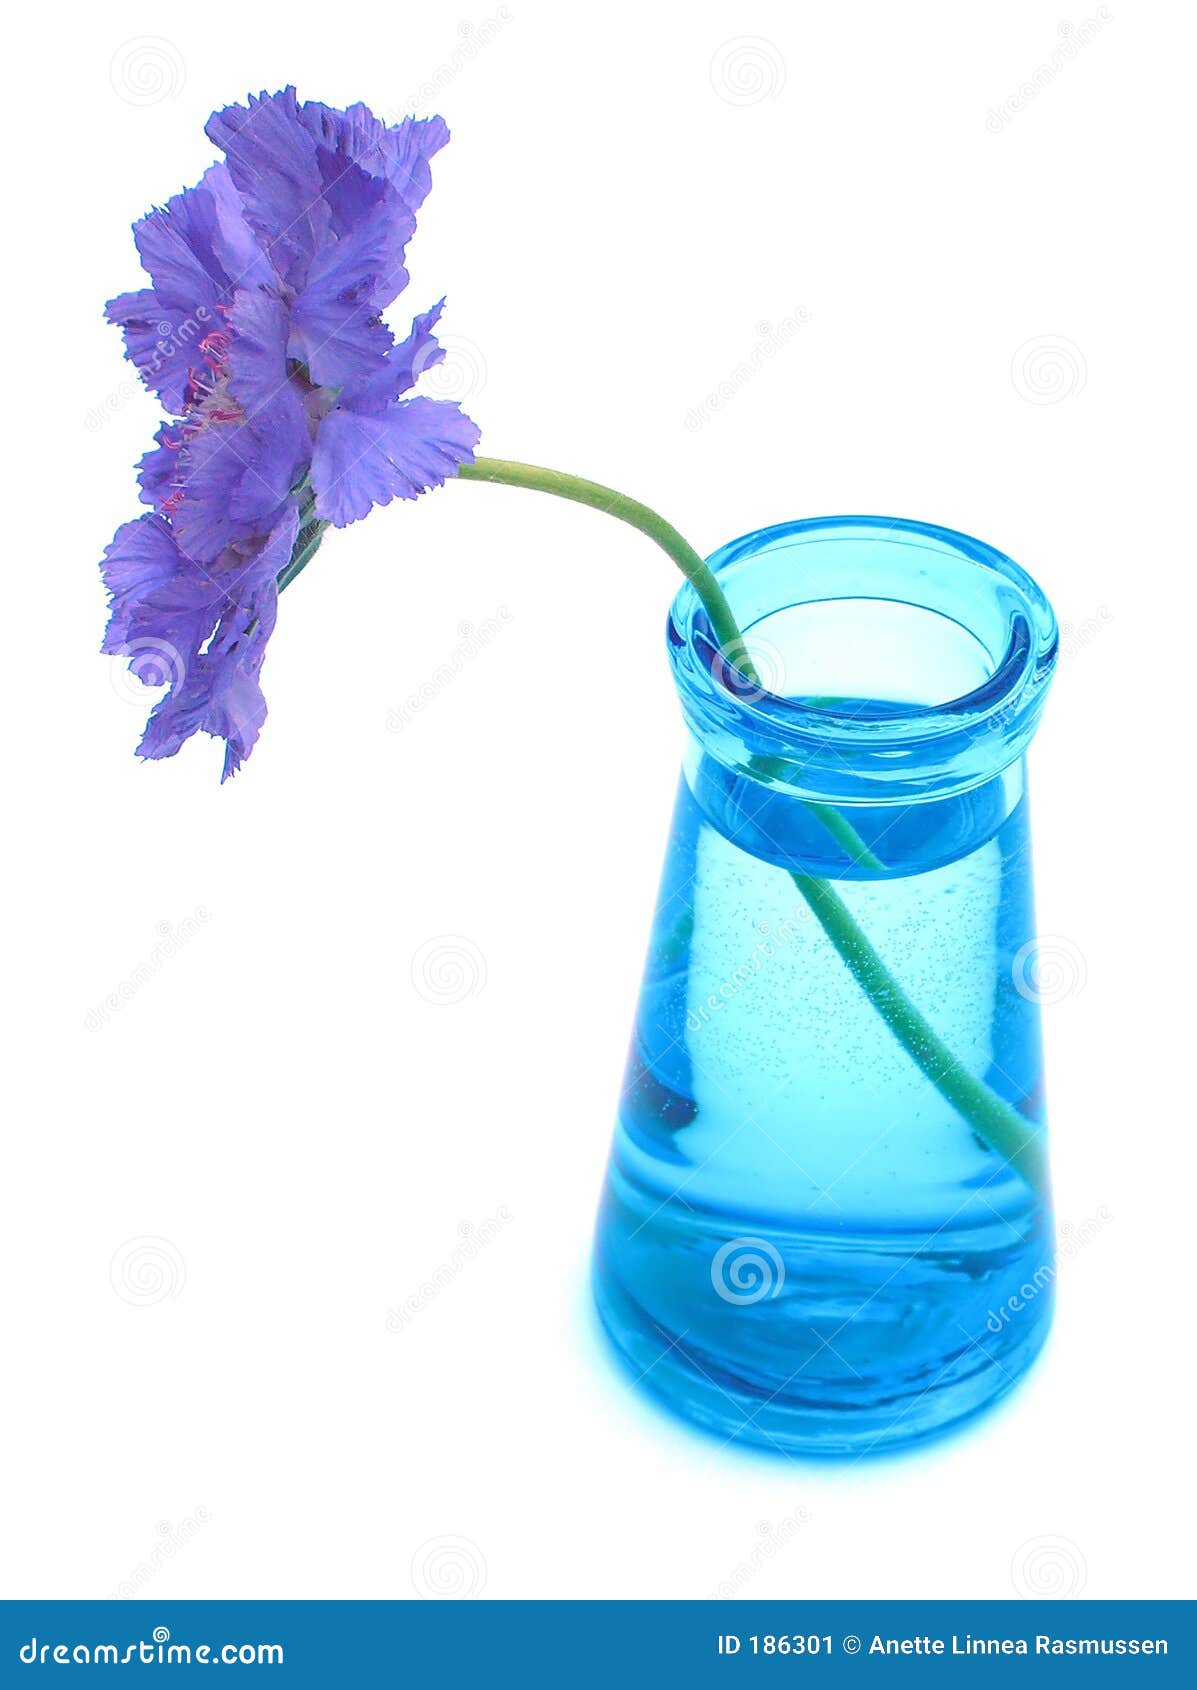 purple scabiosa in blue vase